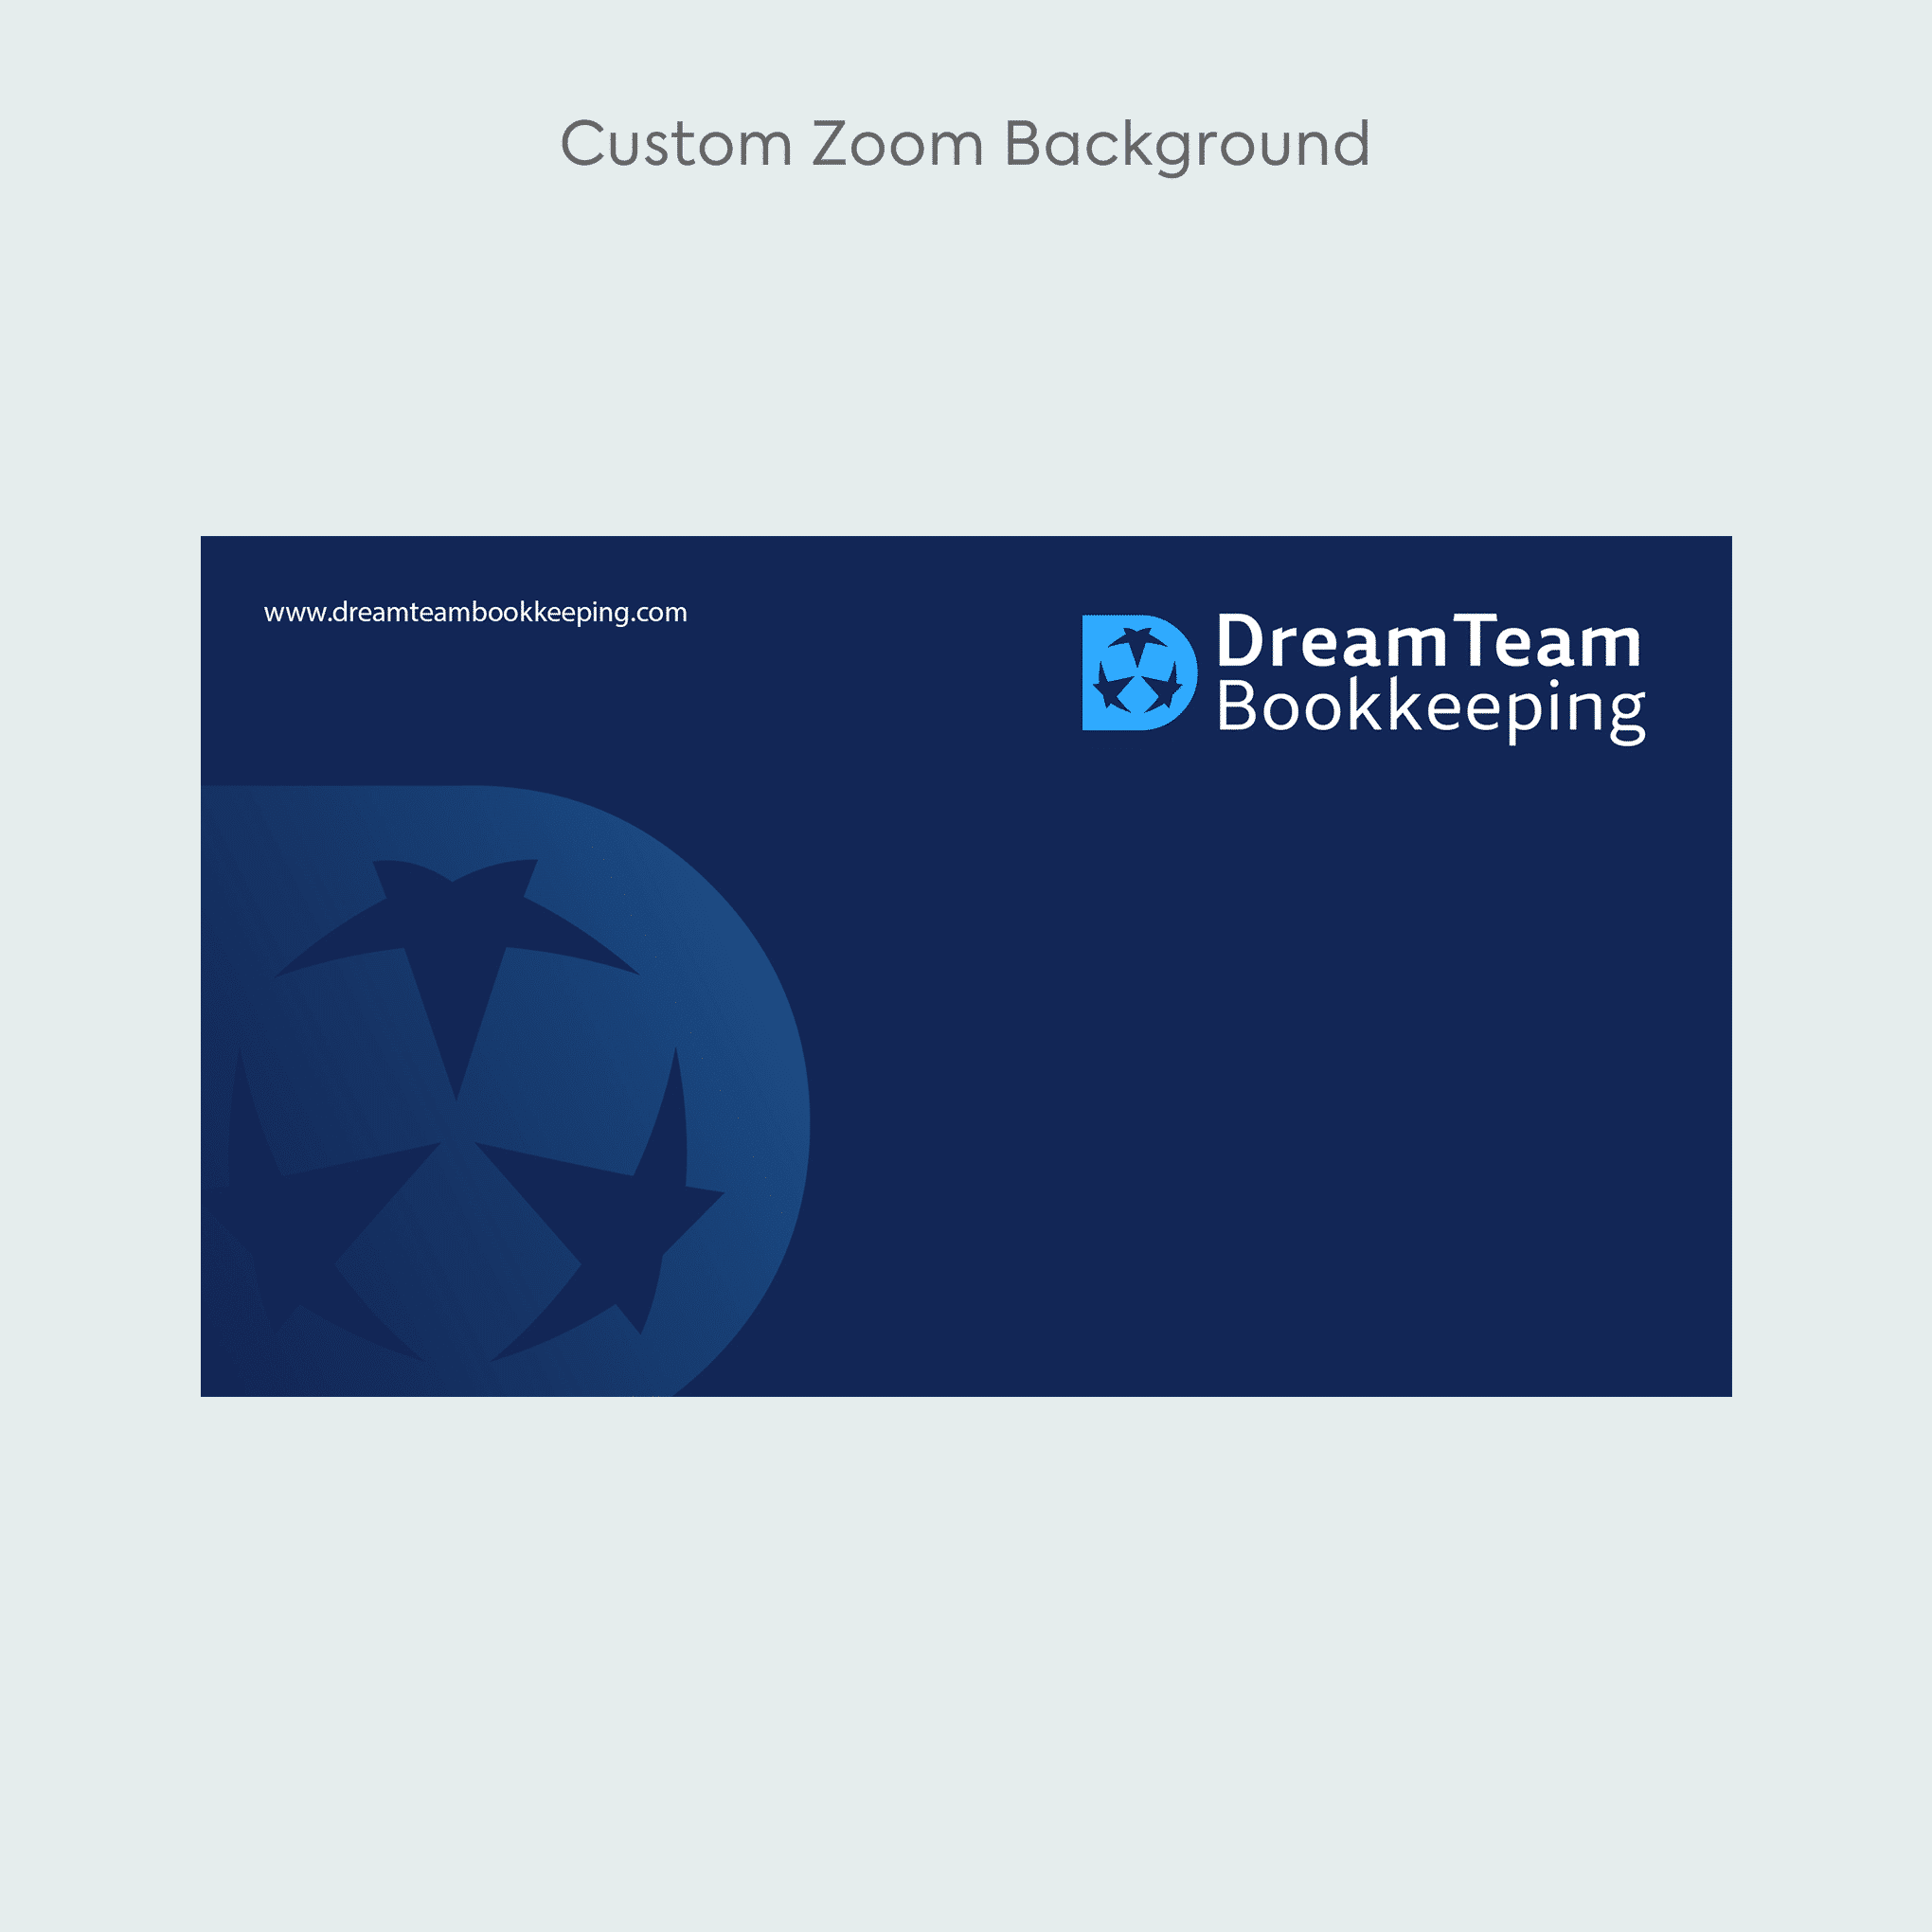 07 - Custom Zoom Background